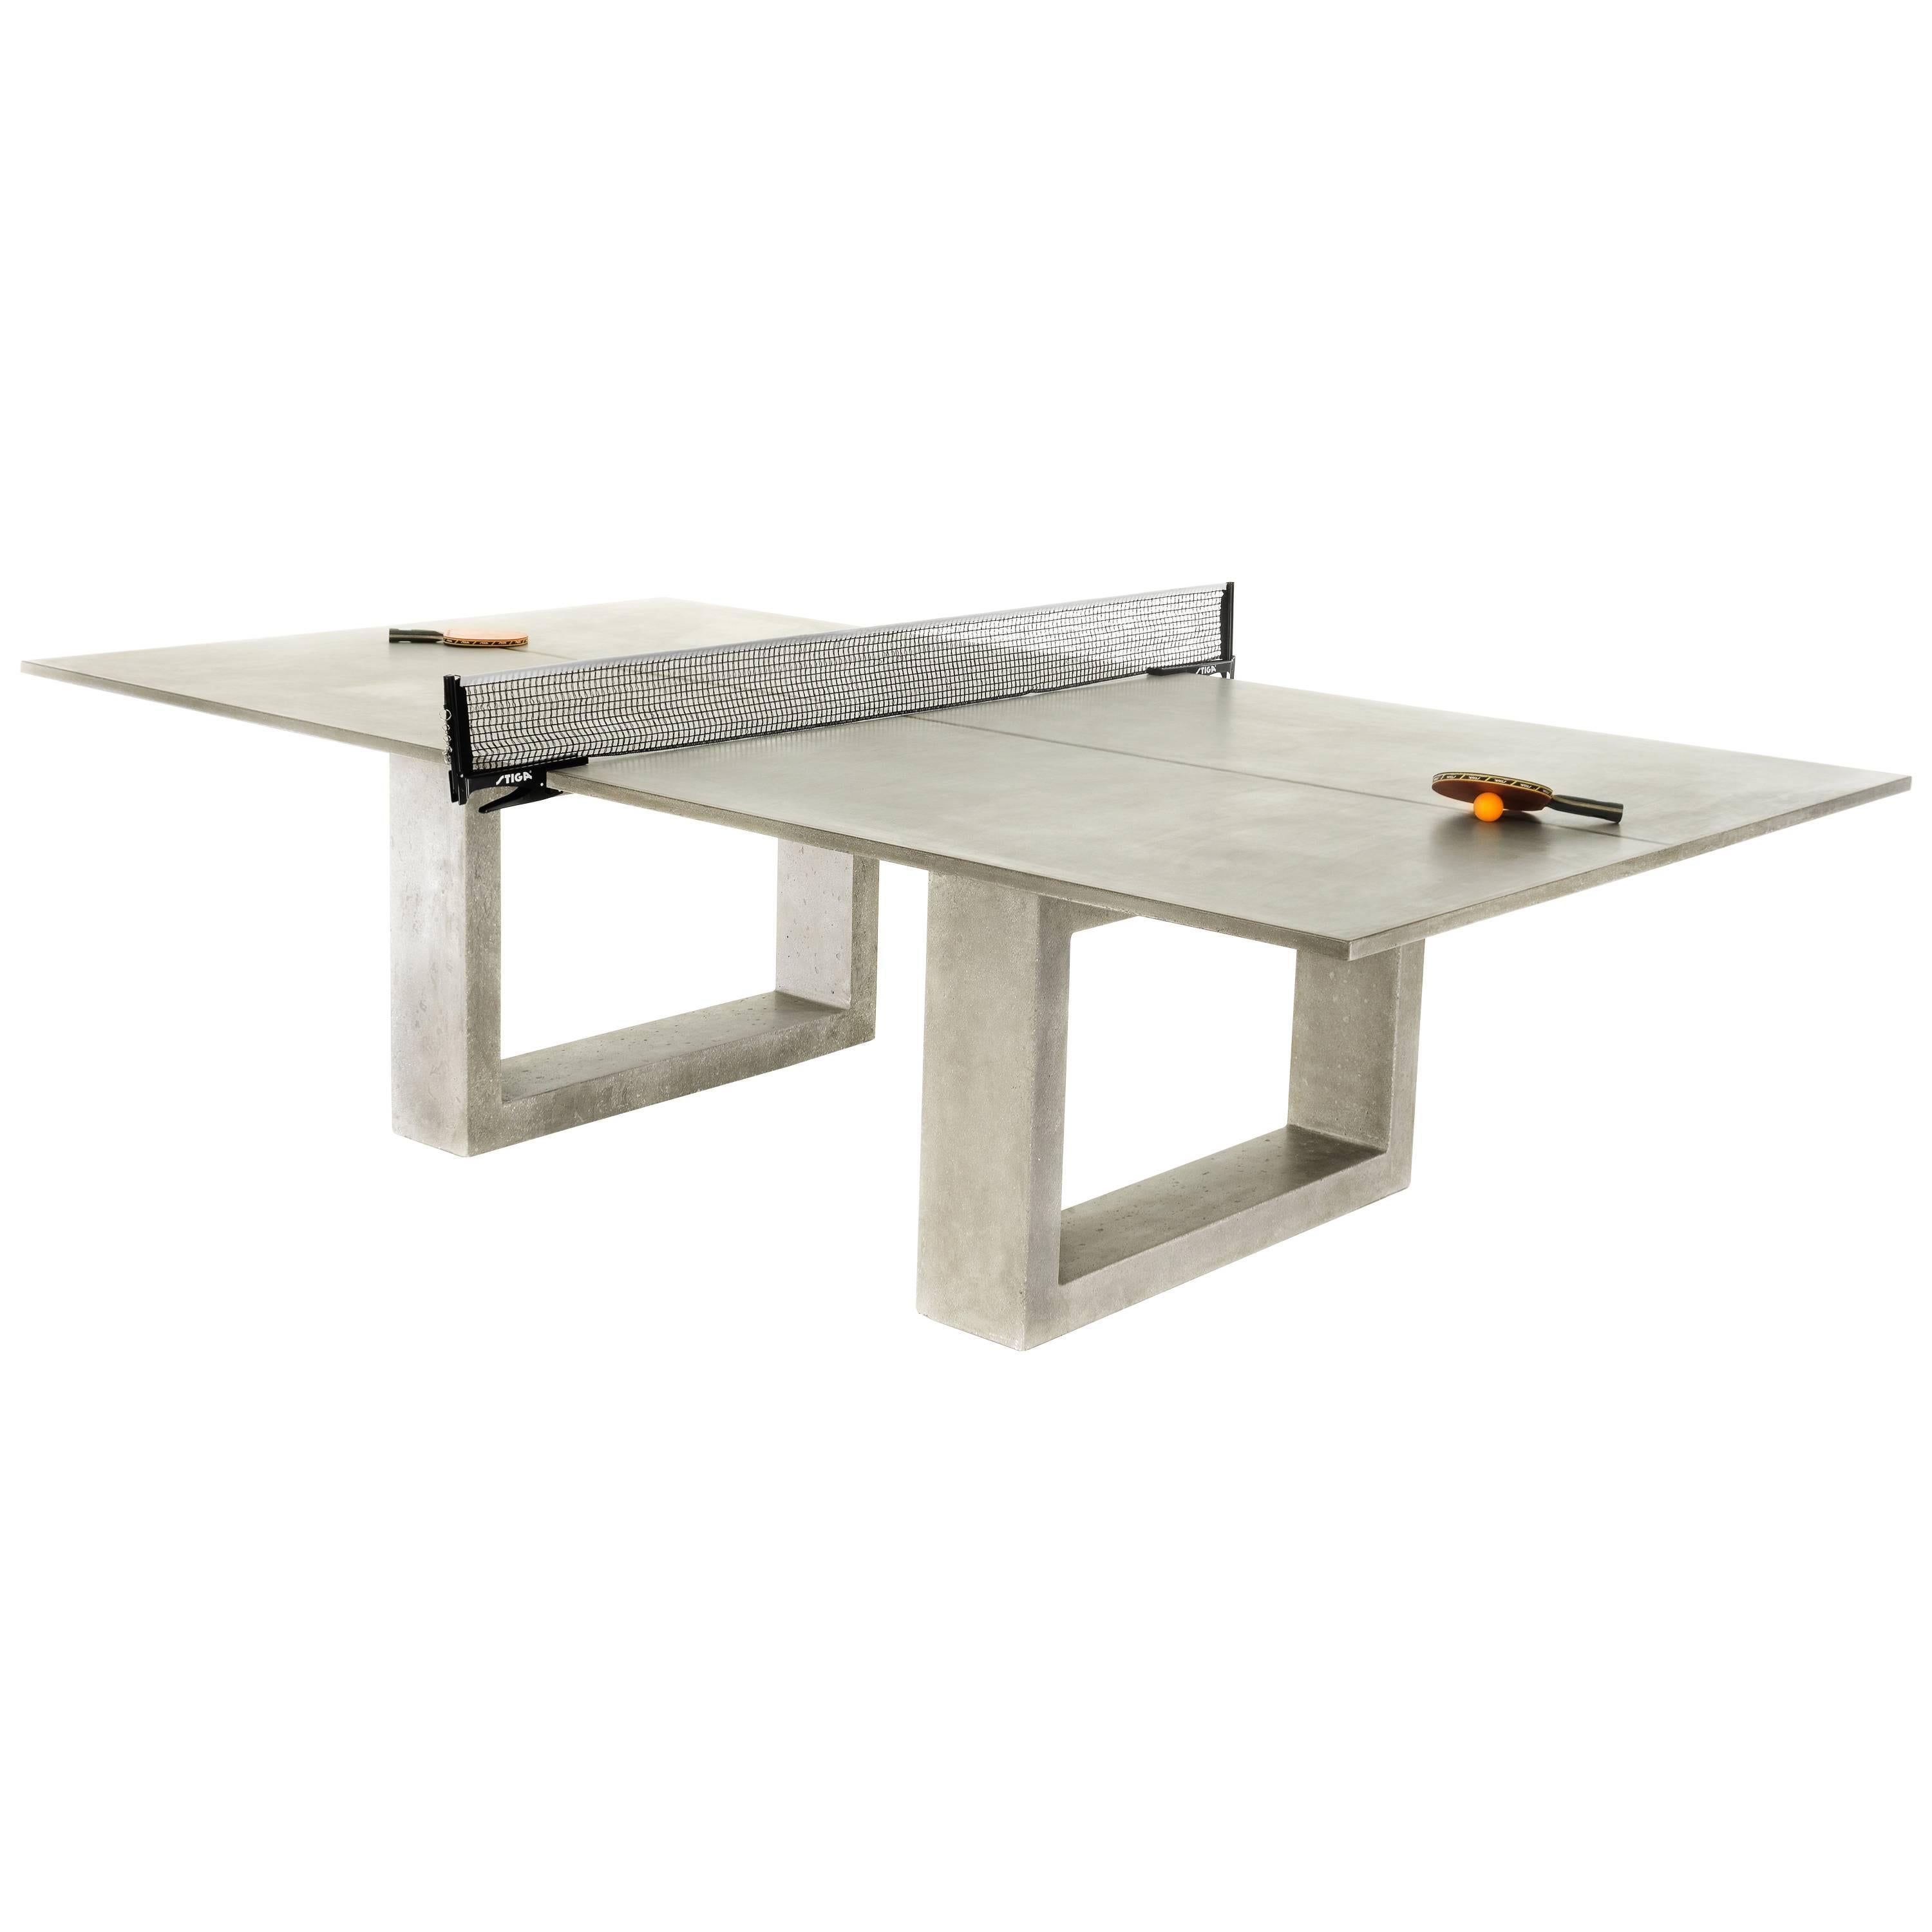 James de Wulf Custom Concrete Ping Pong Table